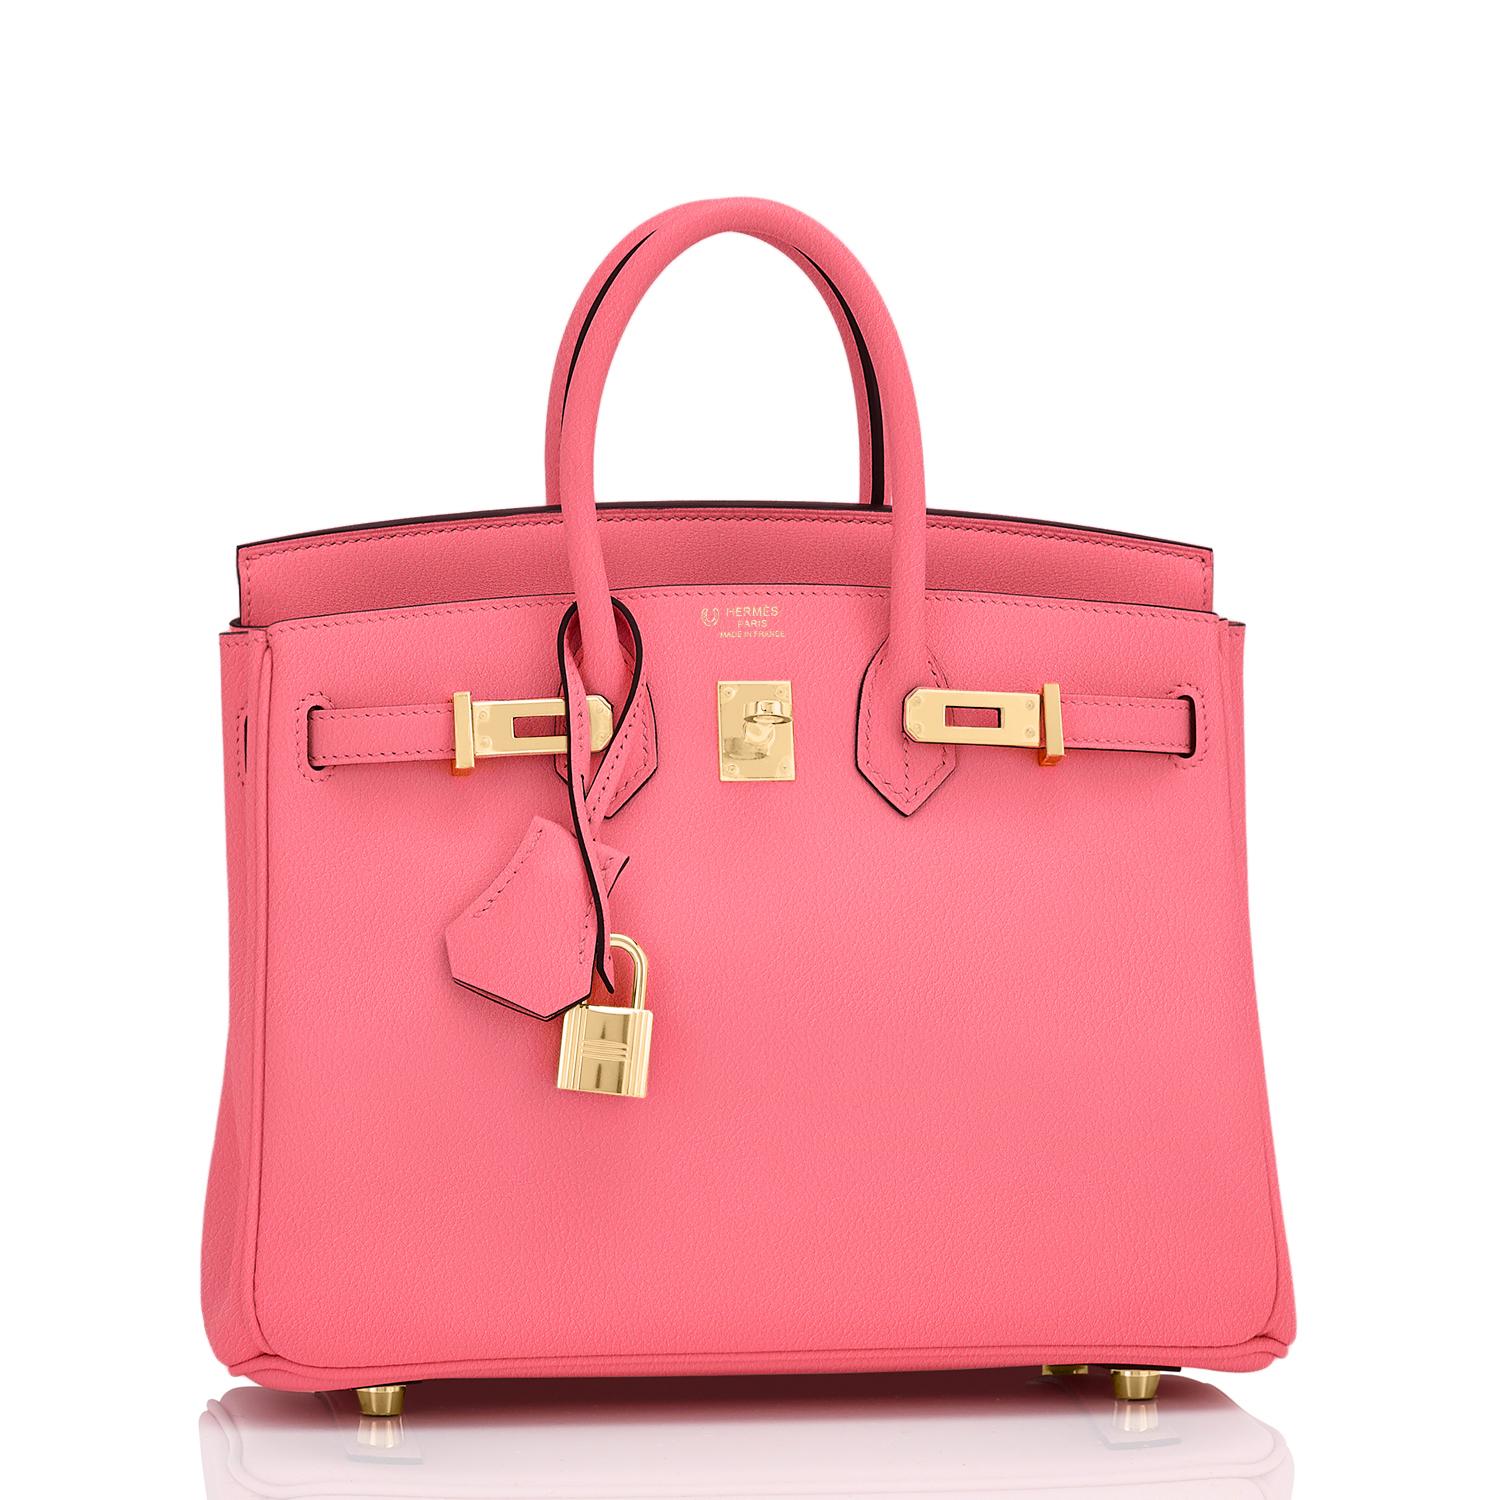  Sac Hermès Birkin 25 Rose Azalee Lime Rose commande VIP exclusive  Pour femmes 